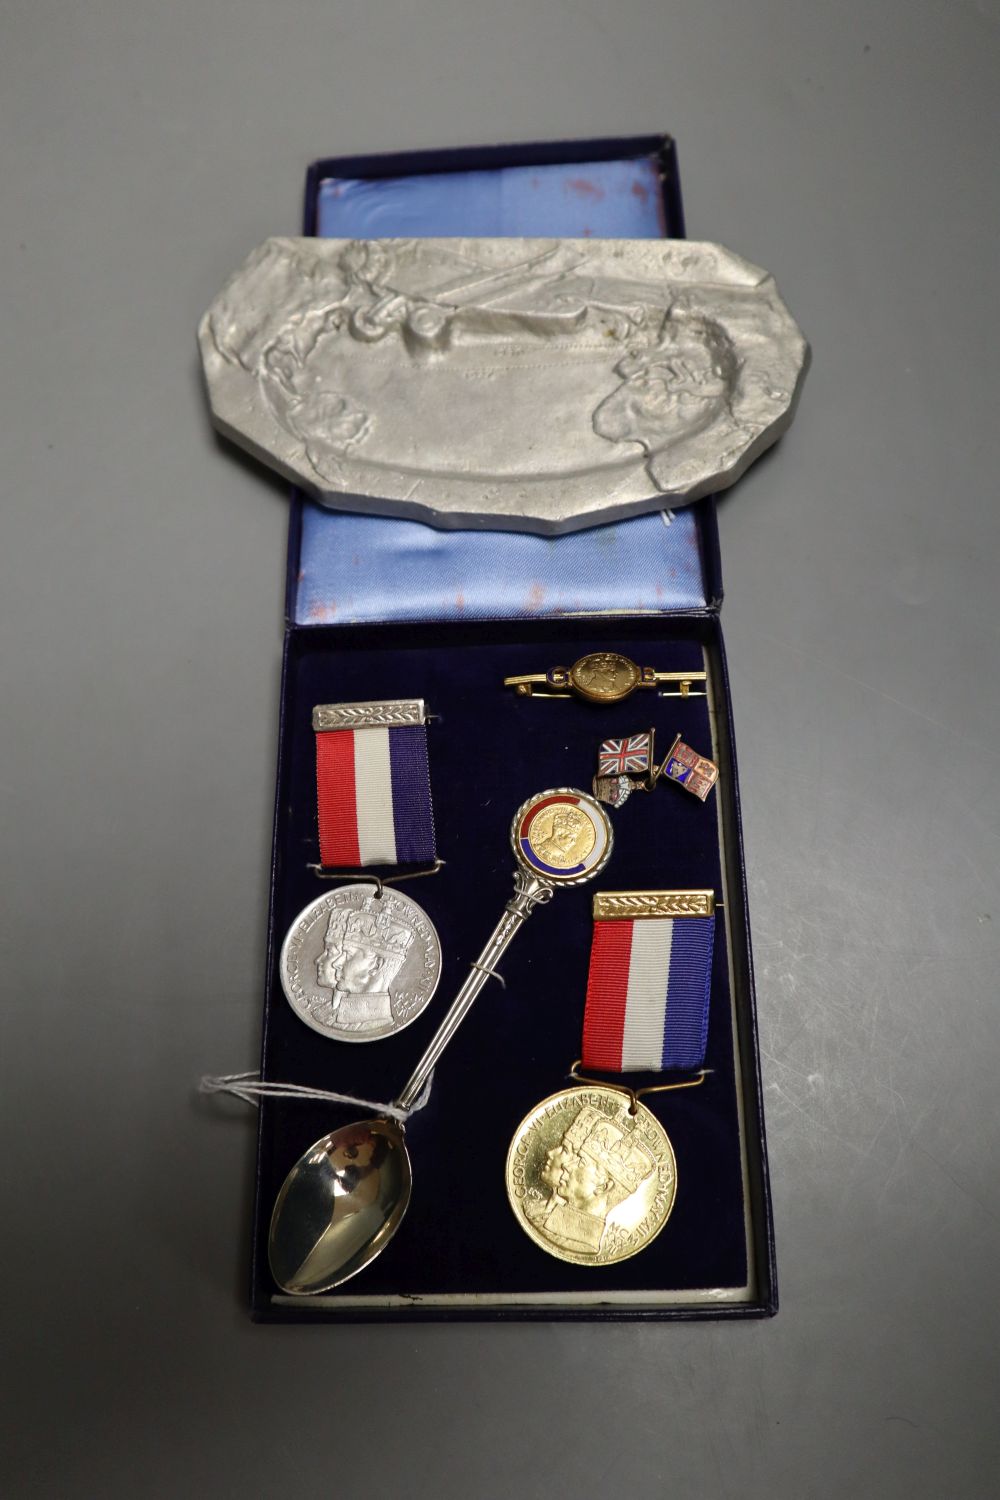 Miscellaneous memorabilia, including a Miss Columbia aluminium ashtray